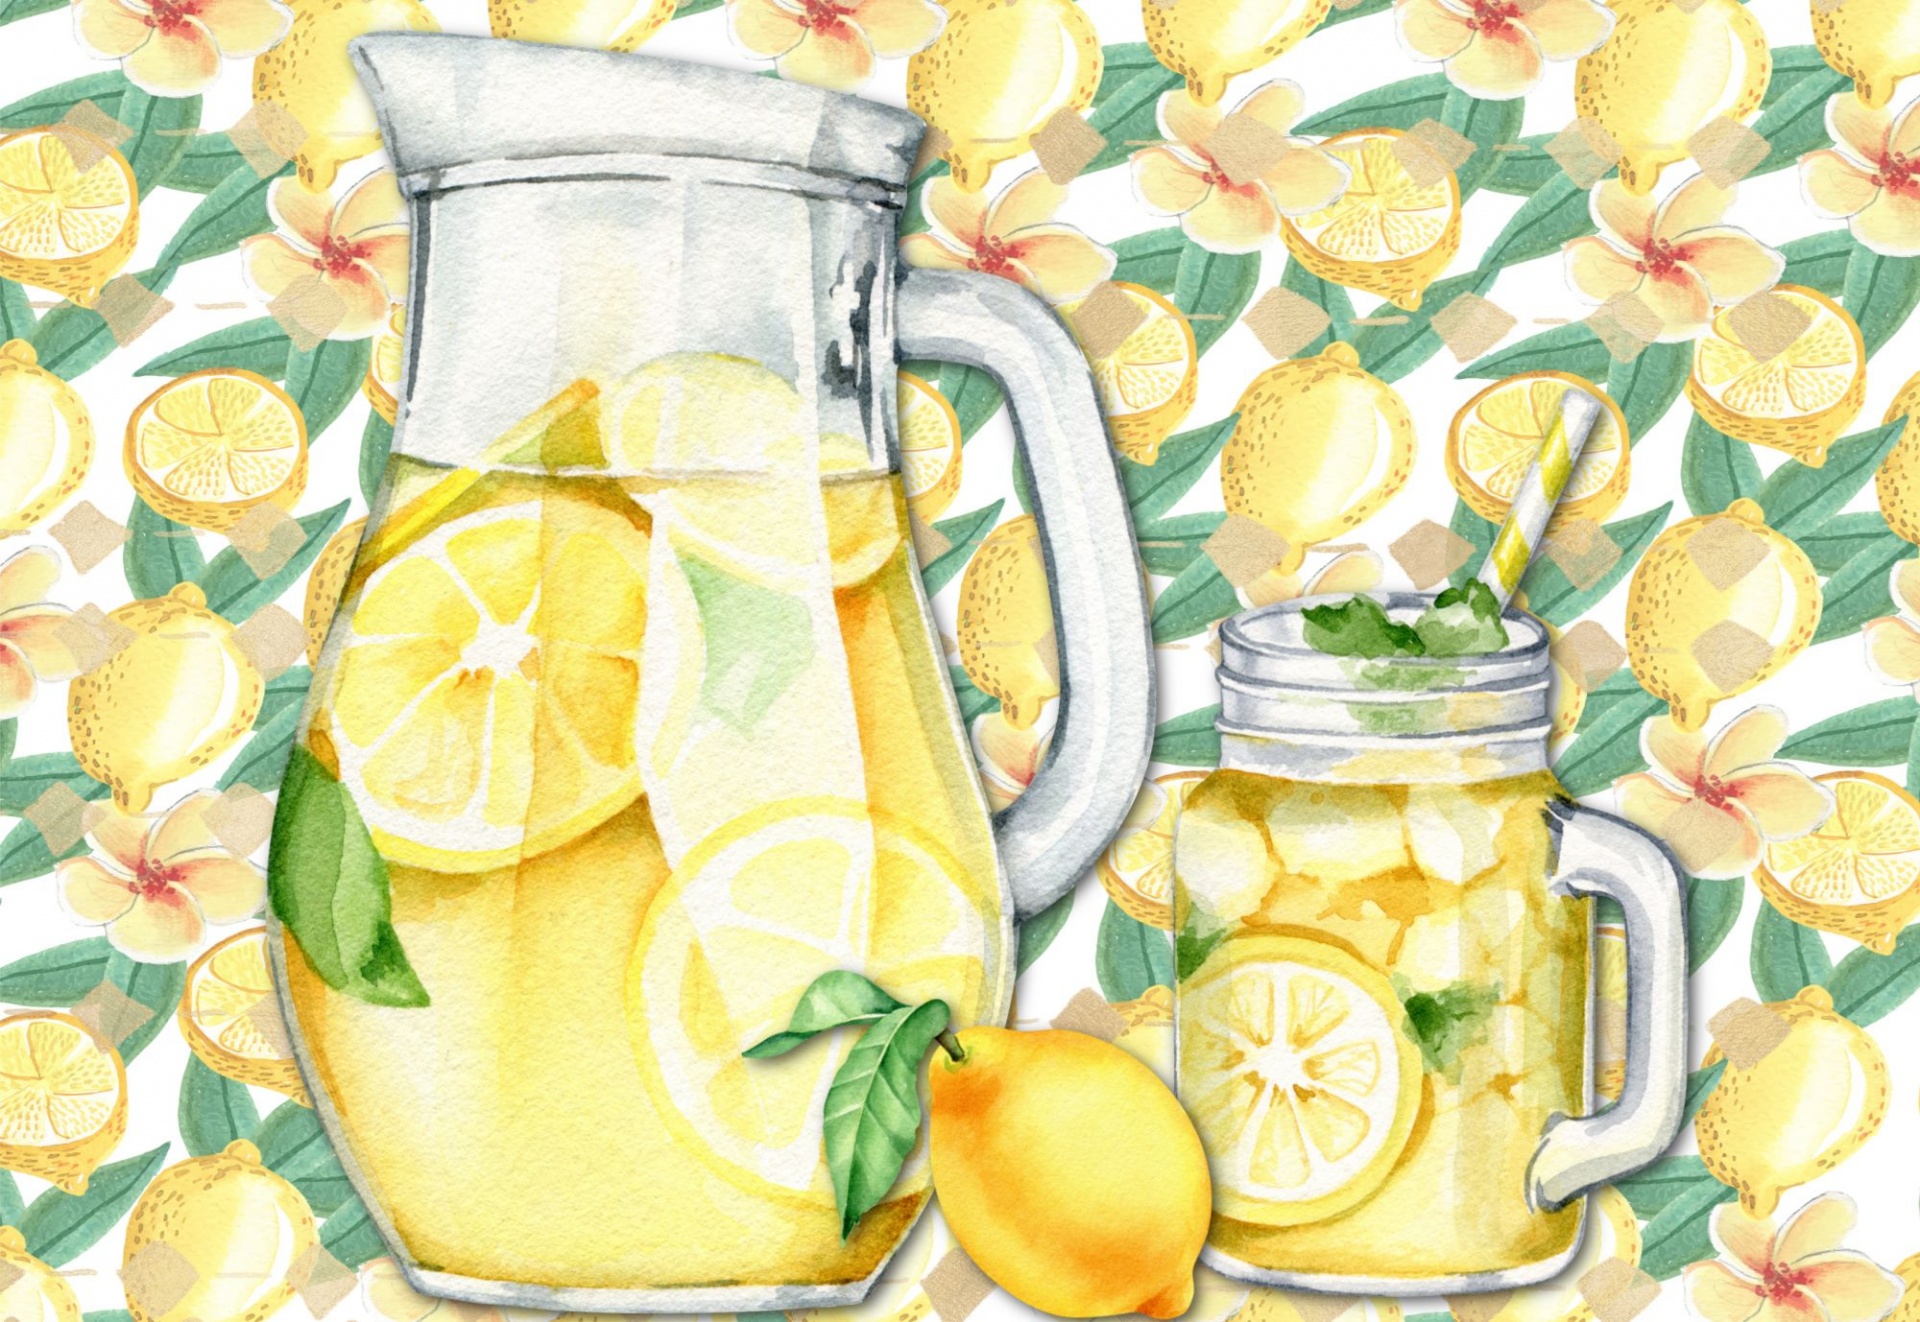 lemon with a pitcher of lemon aid and a glass of lemon aid on a background of lemons